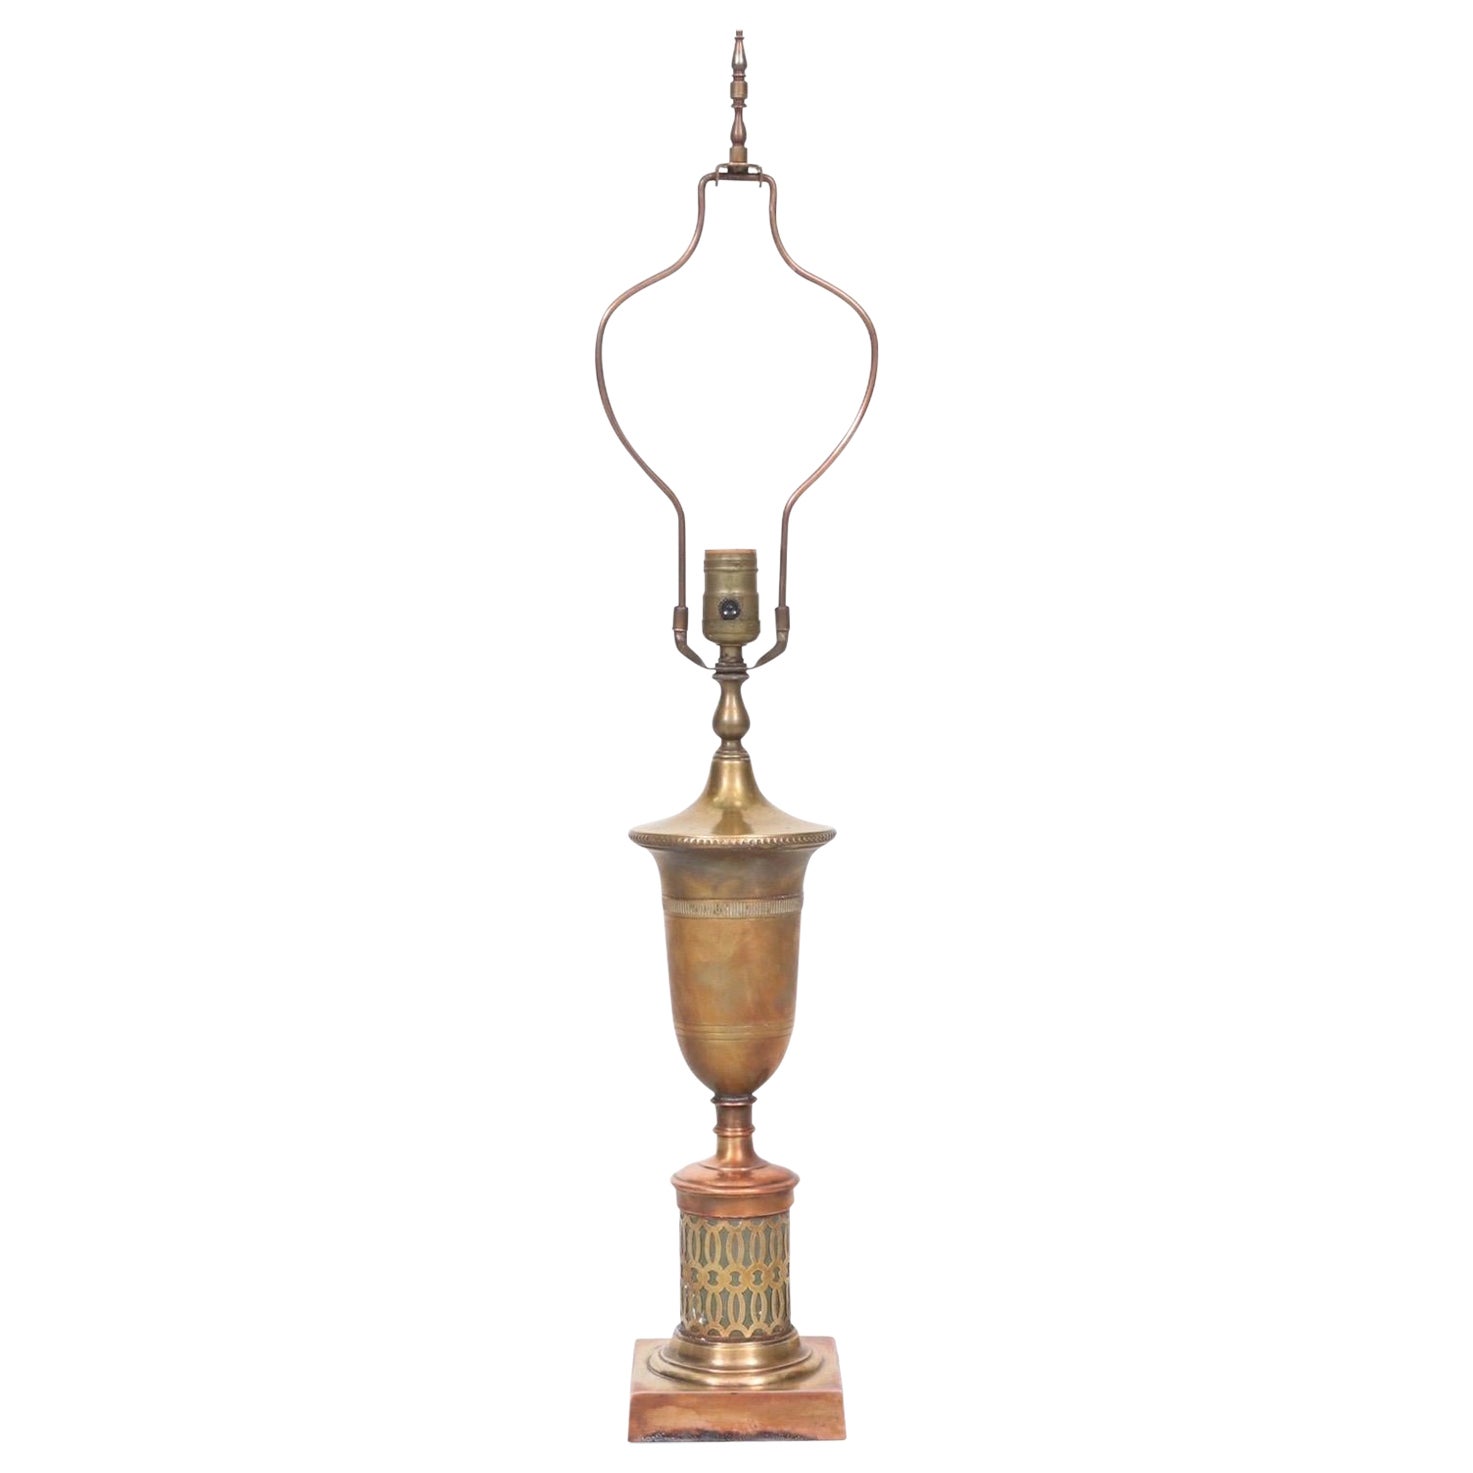 Indian Copper & Teal Tischlampe